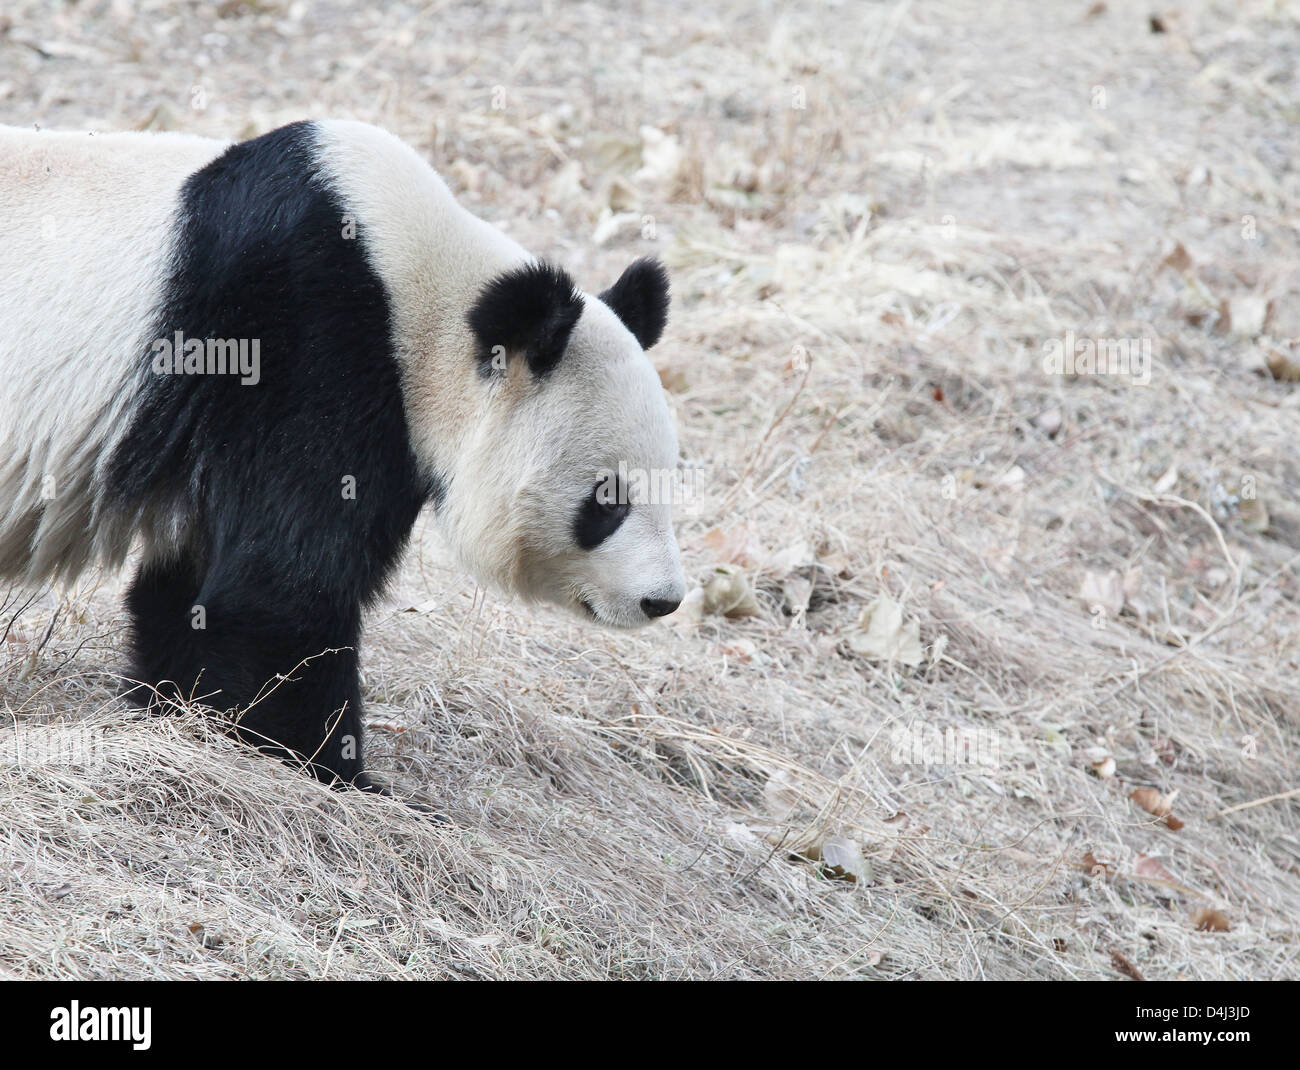 A giant panda seeking and wandering in winter, in beijing zoo Stock Photo